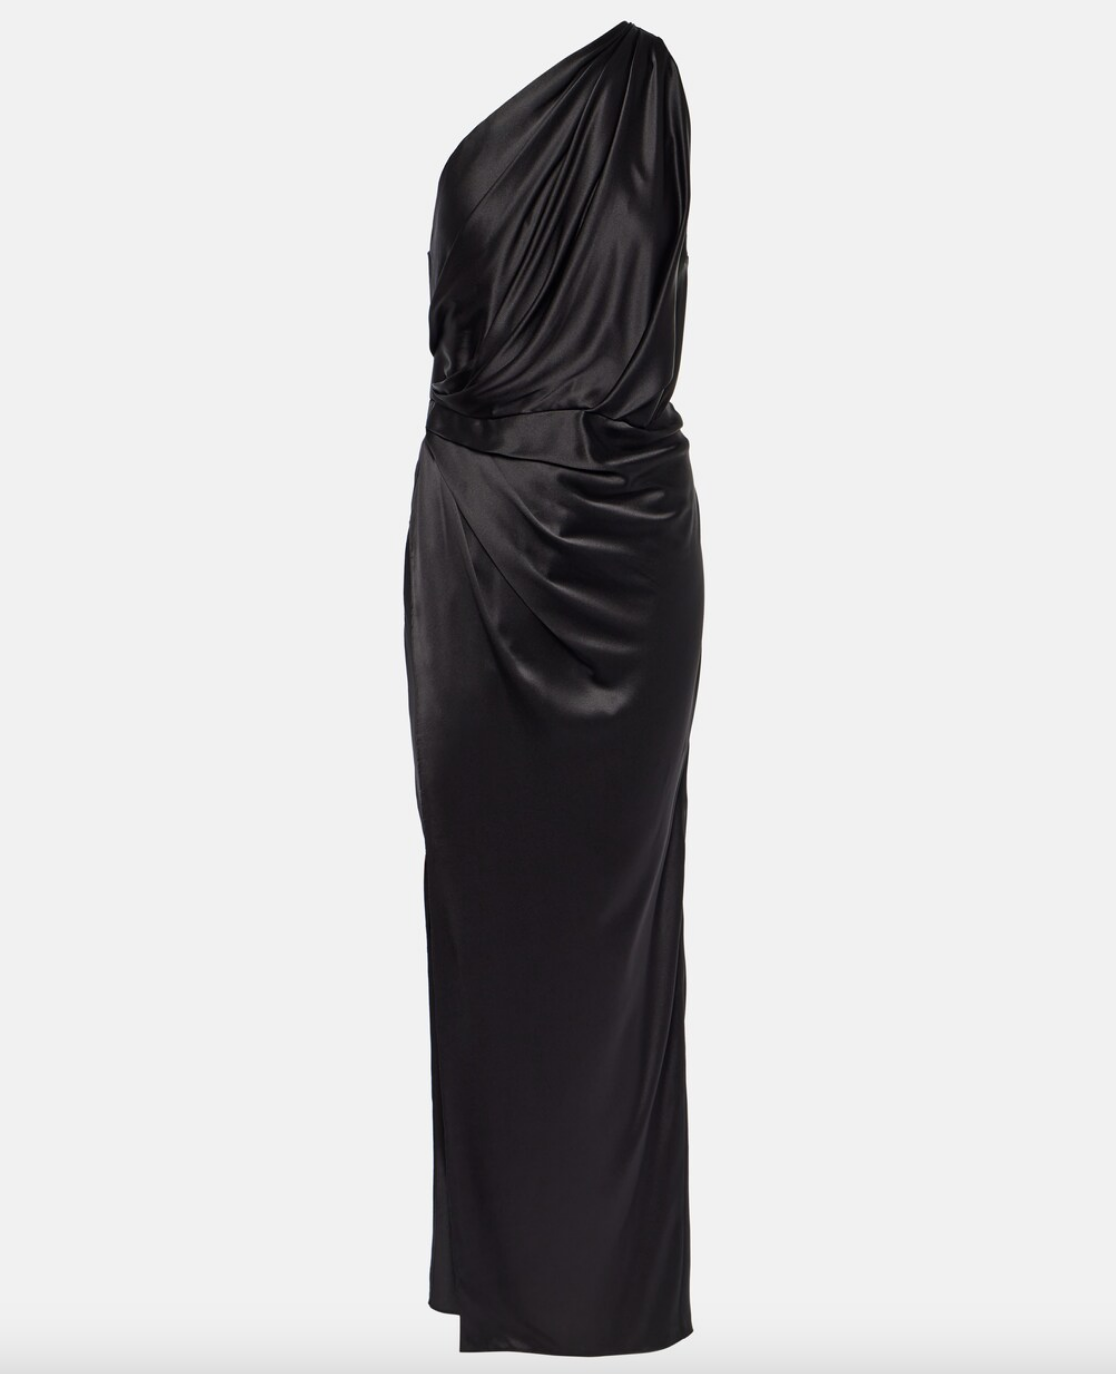 Nicole Martin's Black Satin One Shoulder Dress